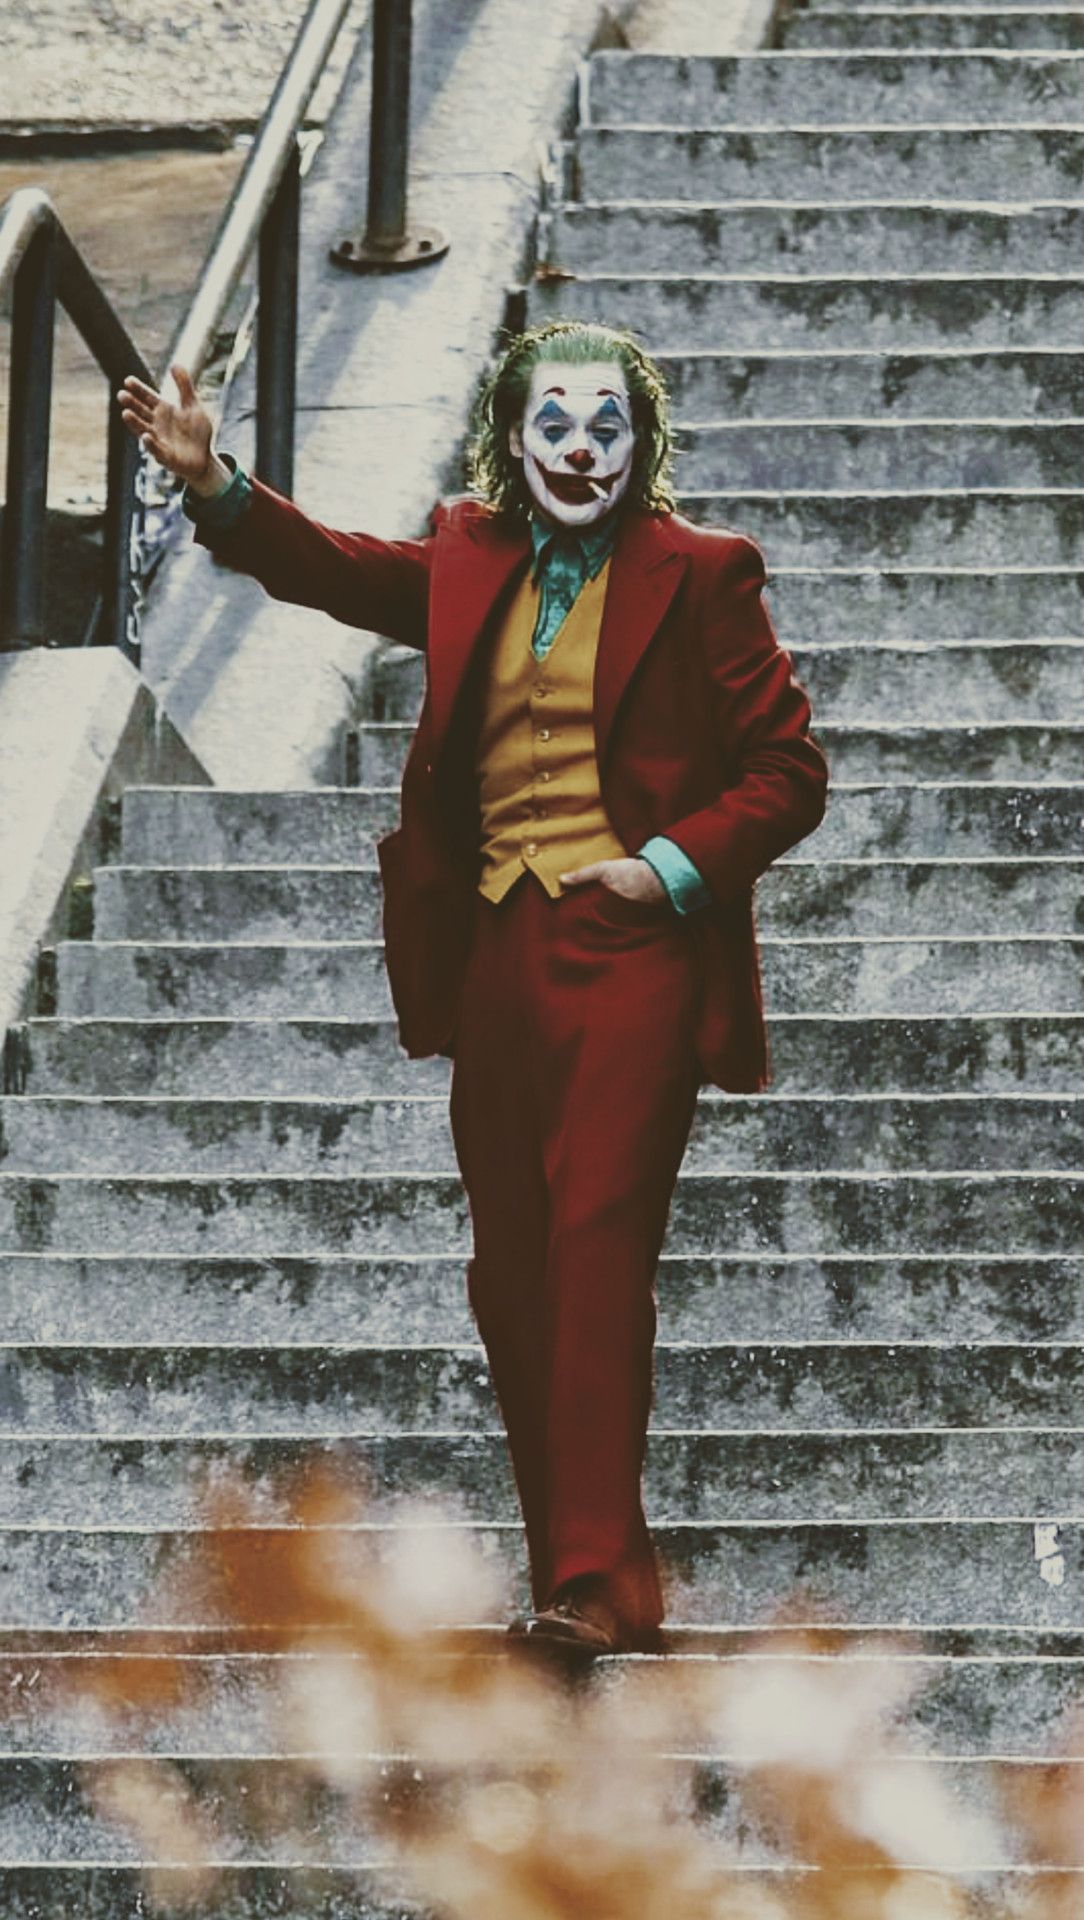 New Best Joker Stairs Bronx Image In 2019. Joker iphone